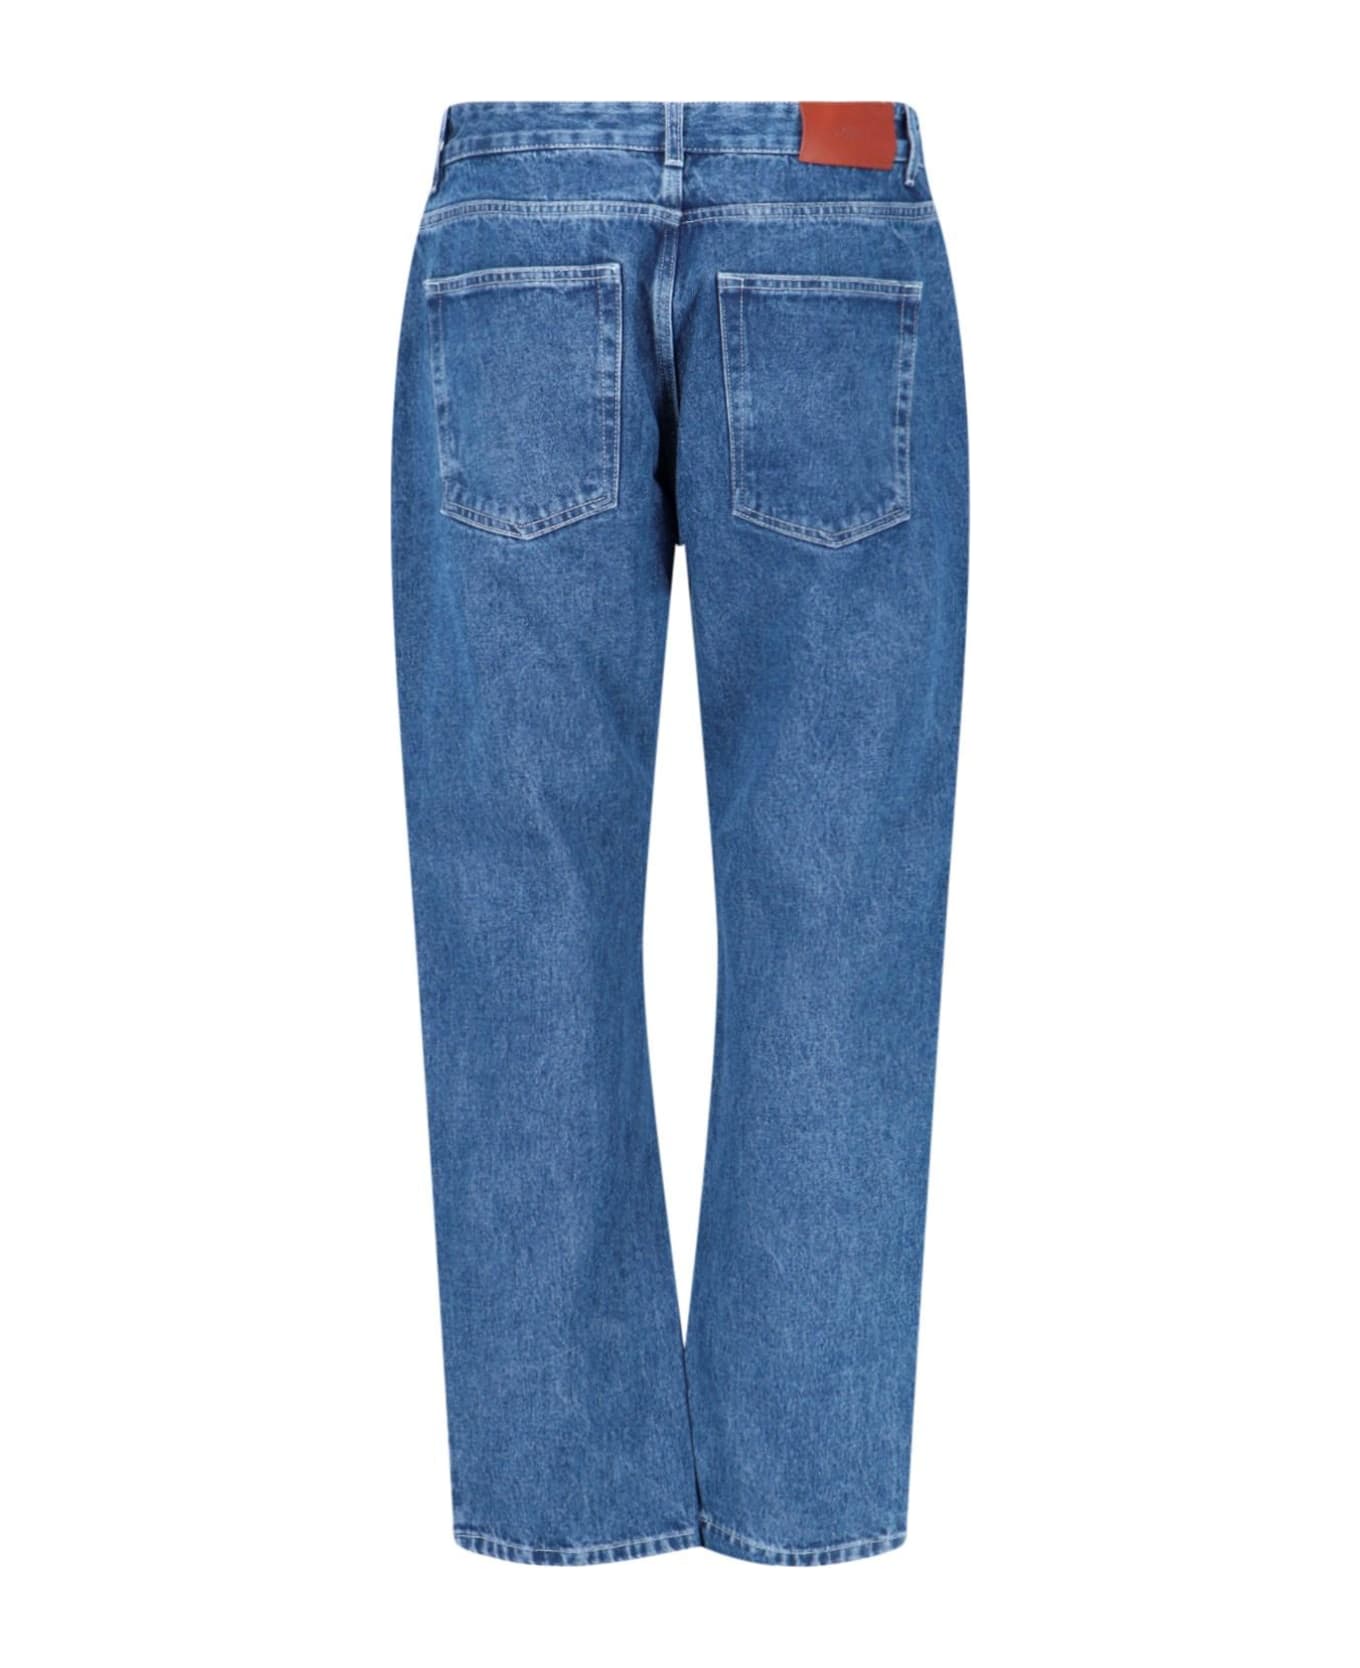 Studio Nicholson Straight Jeans - DENIM BLUE